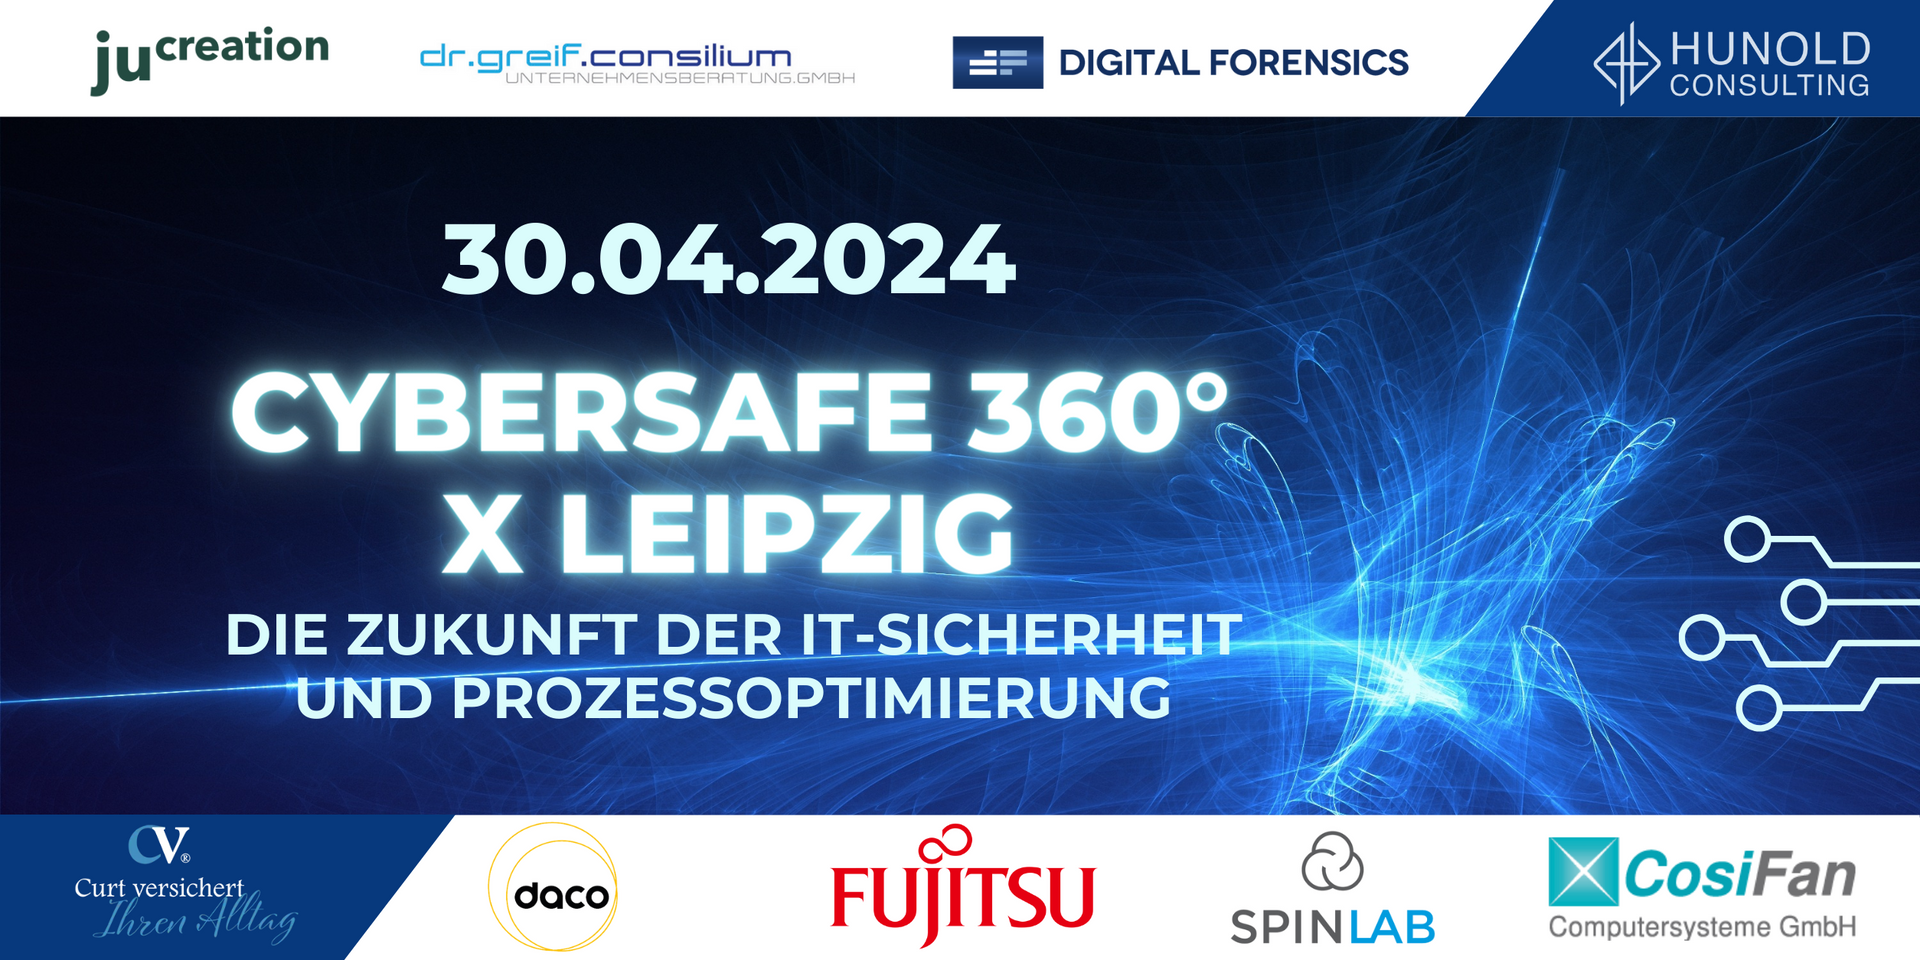 Q1 Cybersafe360 x Leipzig